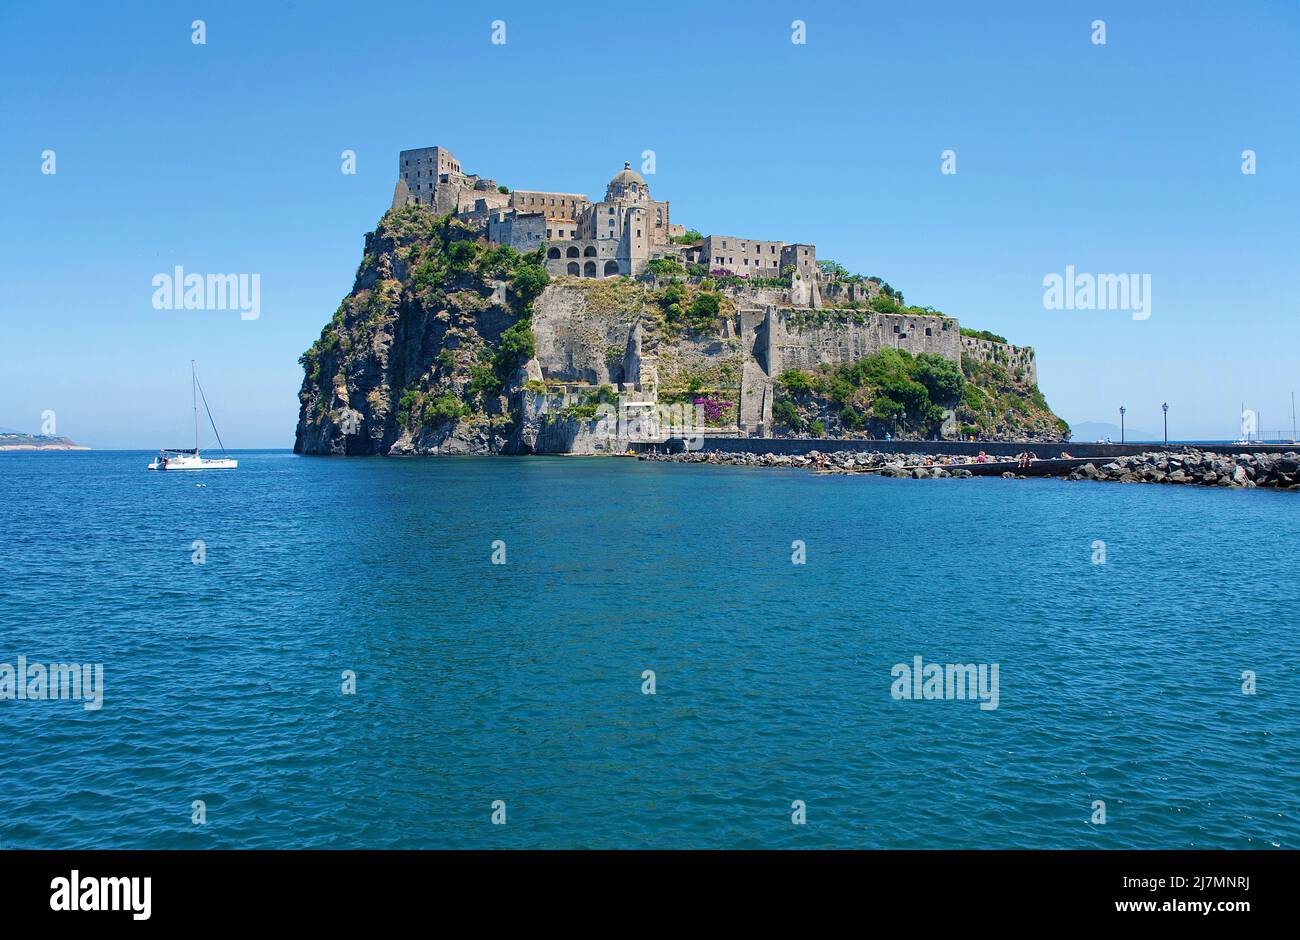 Castello Aragonese auf der Insel Ischia, Italien, Tyrrhenisches Meer, Mittelmeer Stockfoto